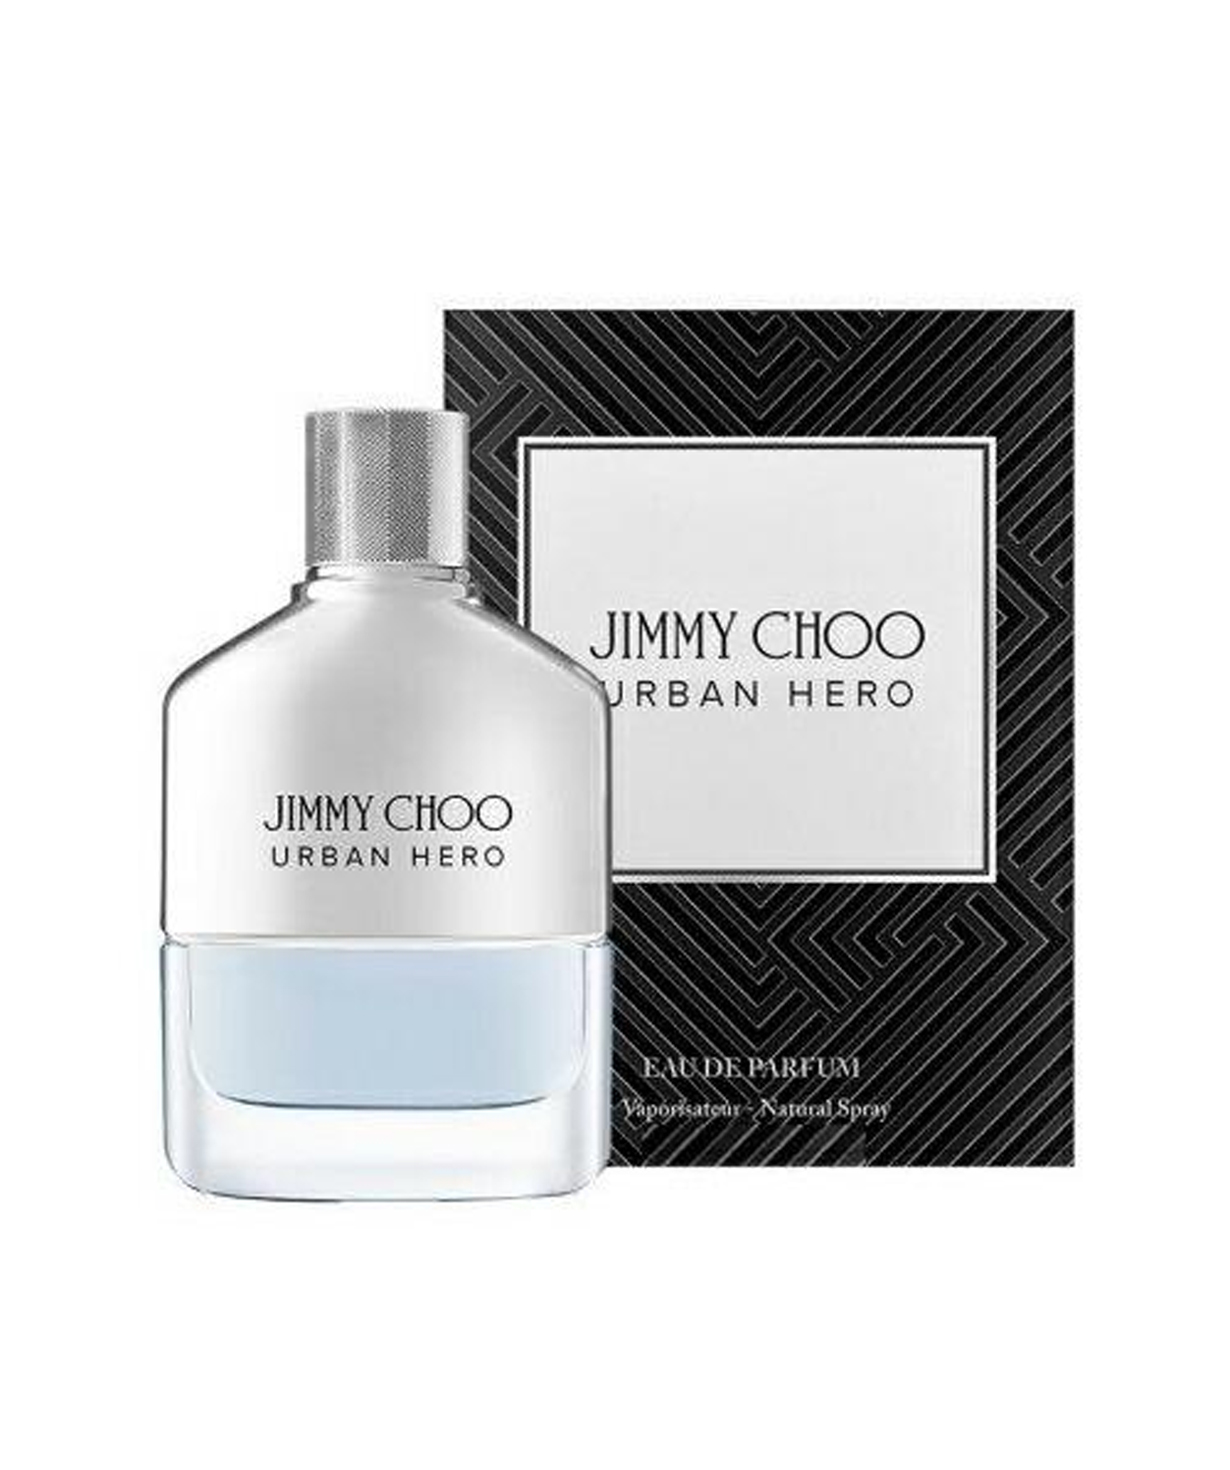 Perfume «Jimmy Choo» Urban Hero, for men, 30 ml